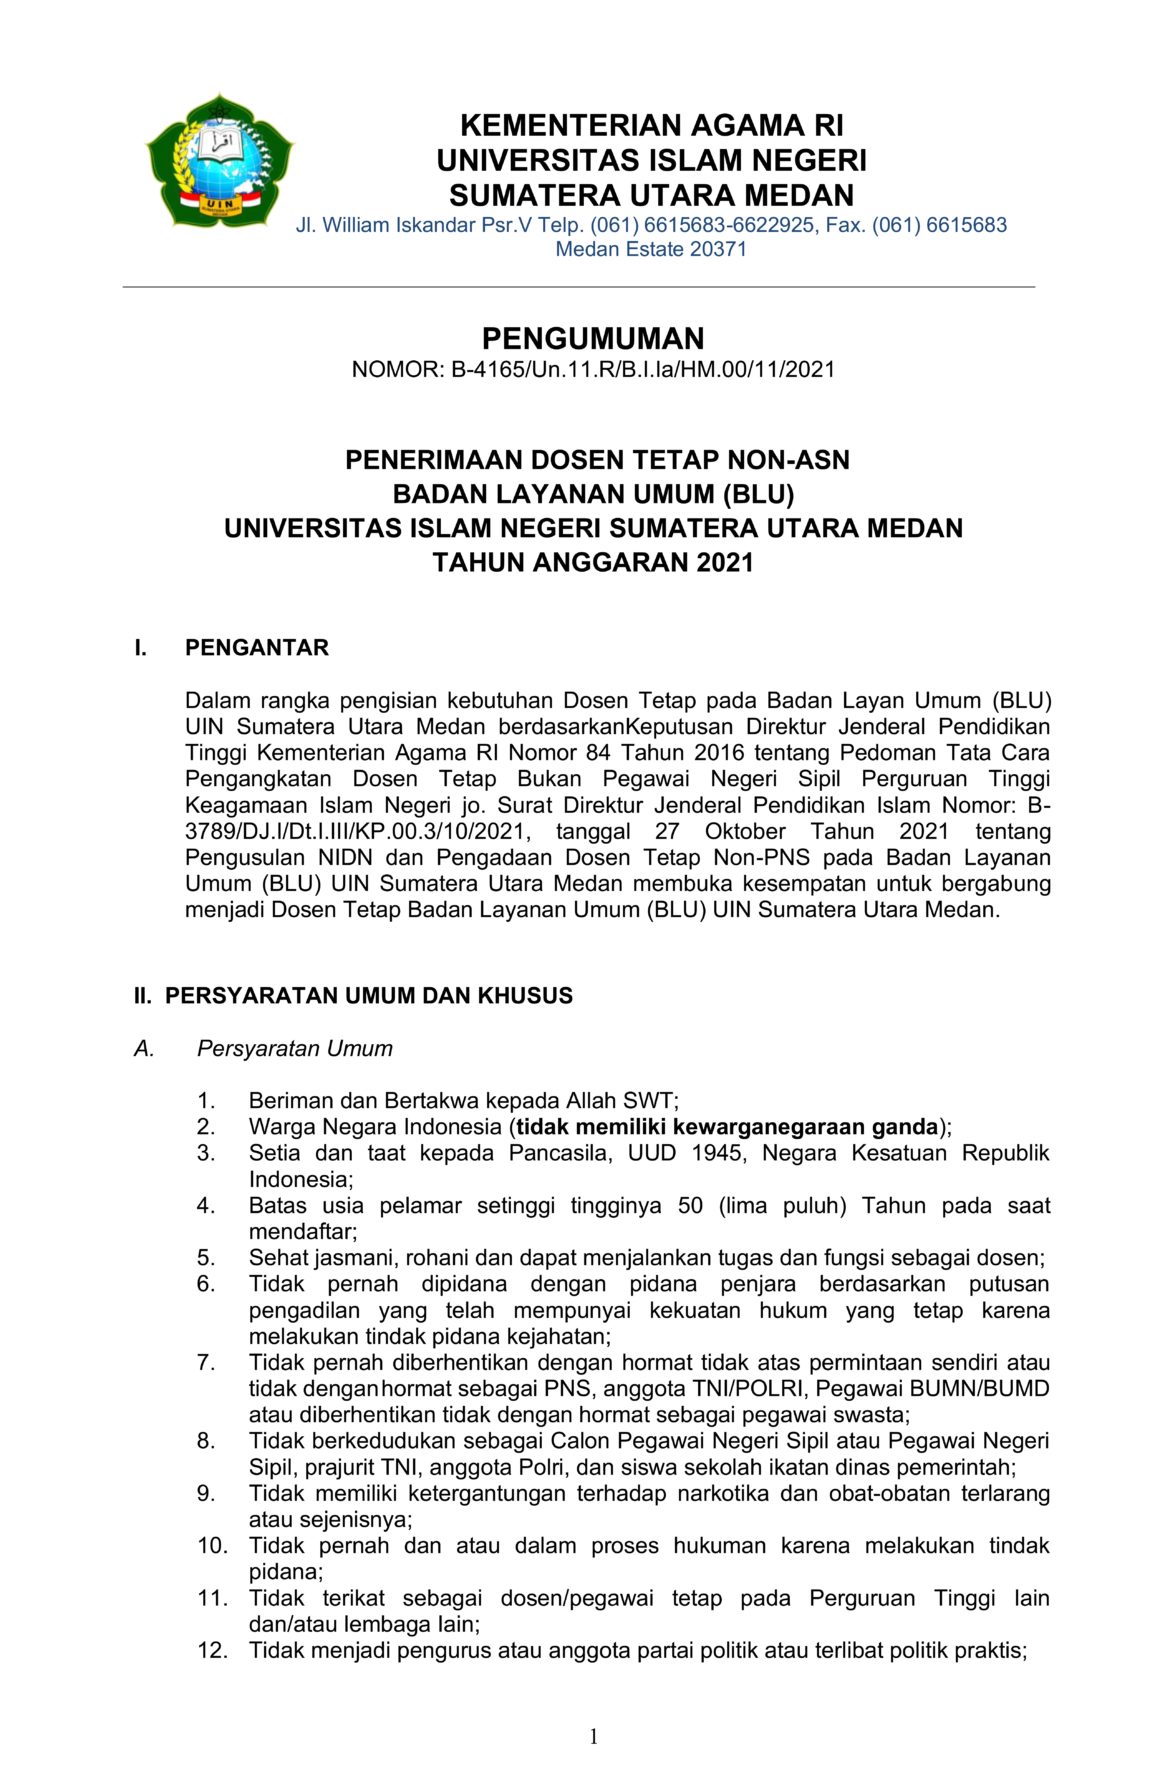 Penerimaan Dosen Tetap Non-ASN Badan Layanan Umum (BLU) UIN Sumatera Utara Medan Tahun Anggaran 2021